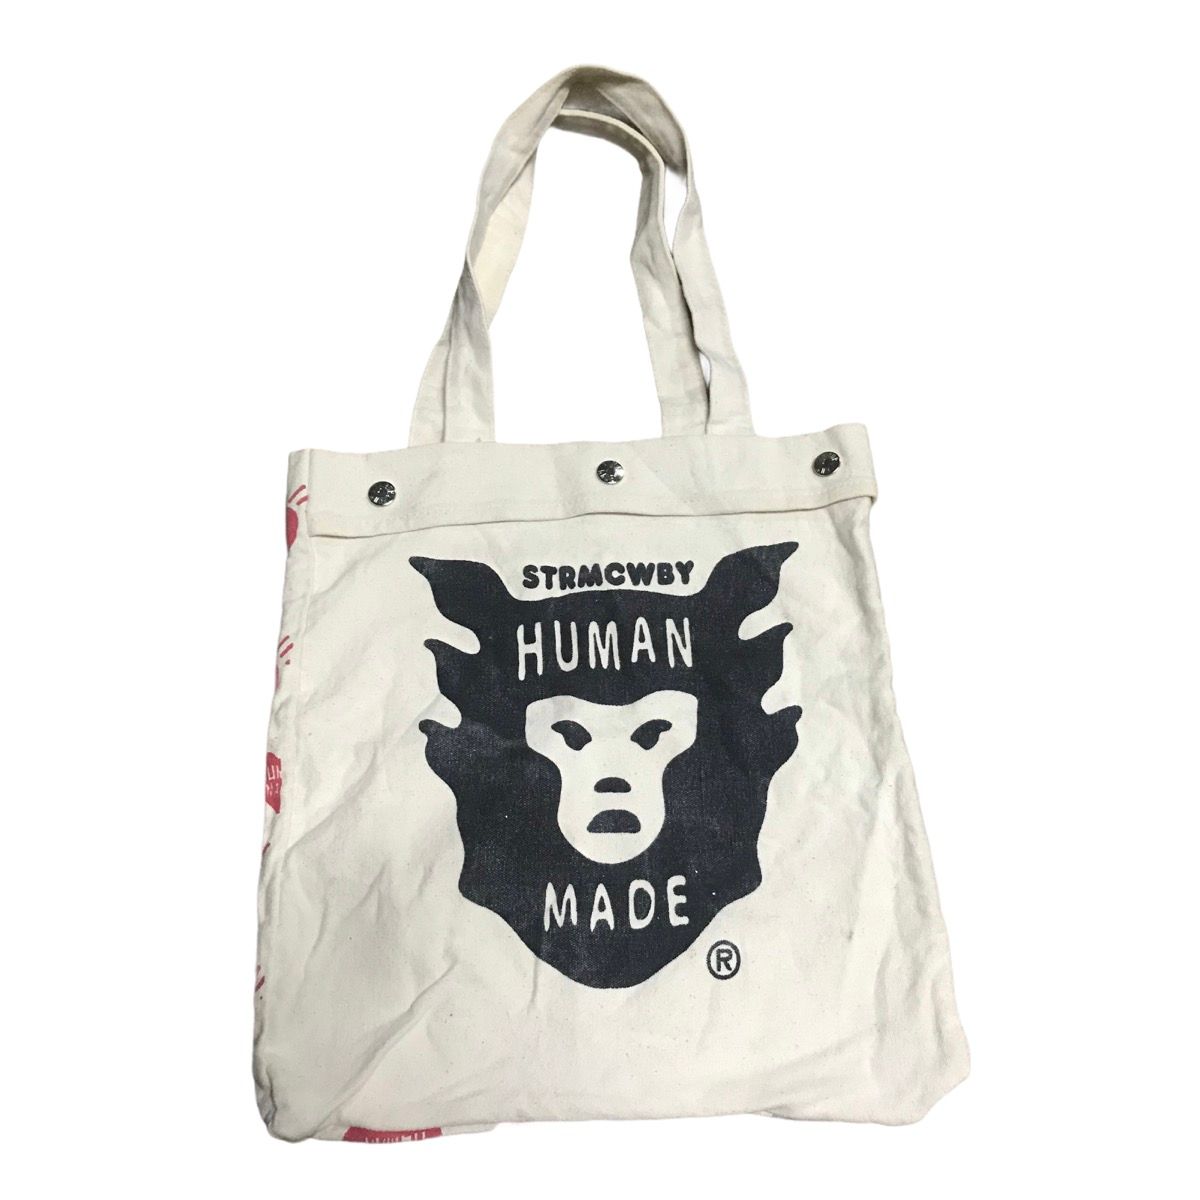 Human made heart logo tote bag - 1